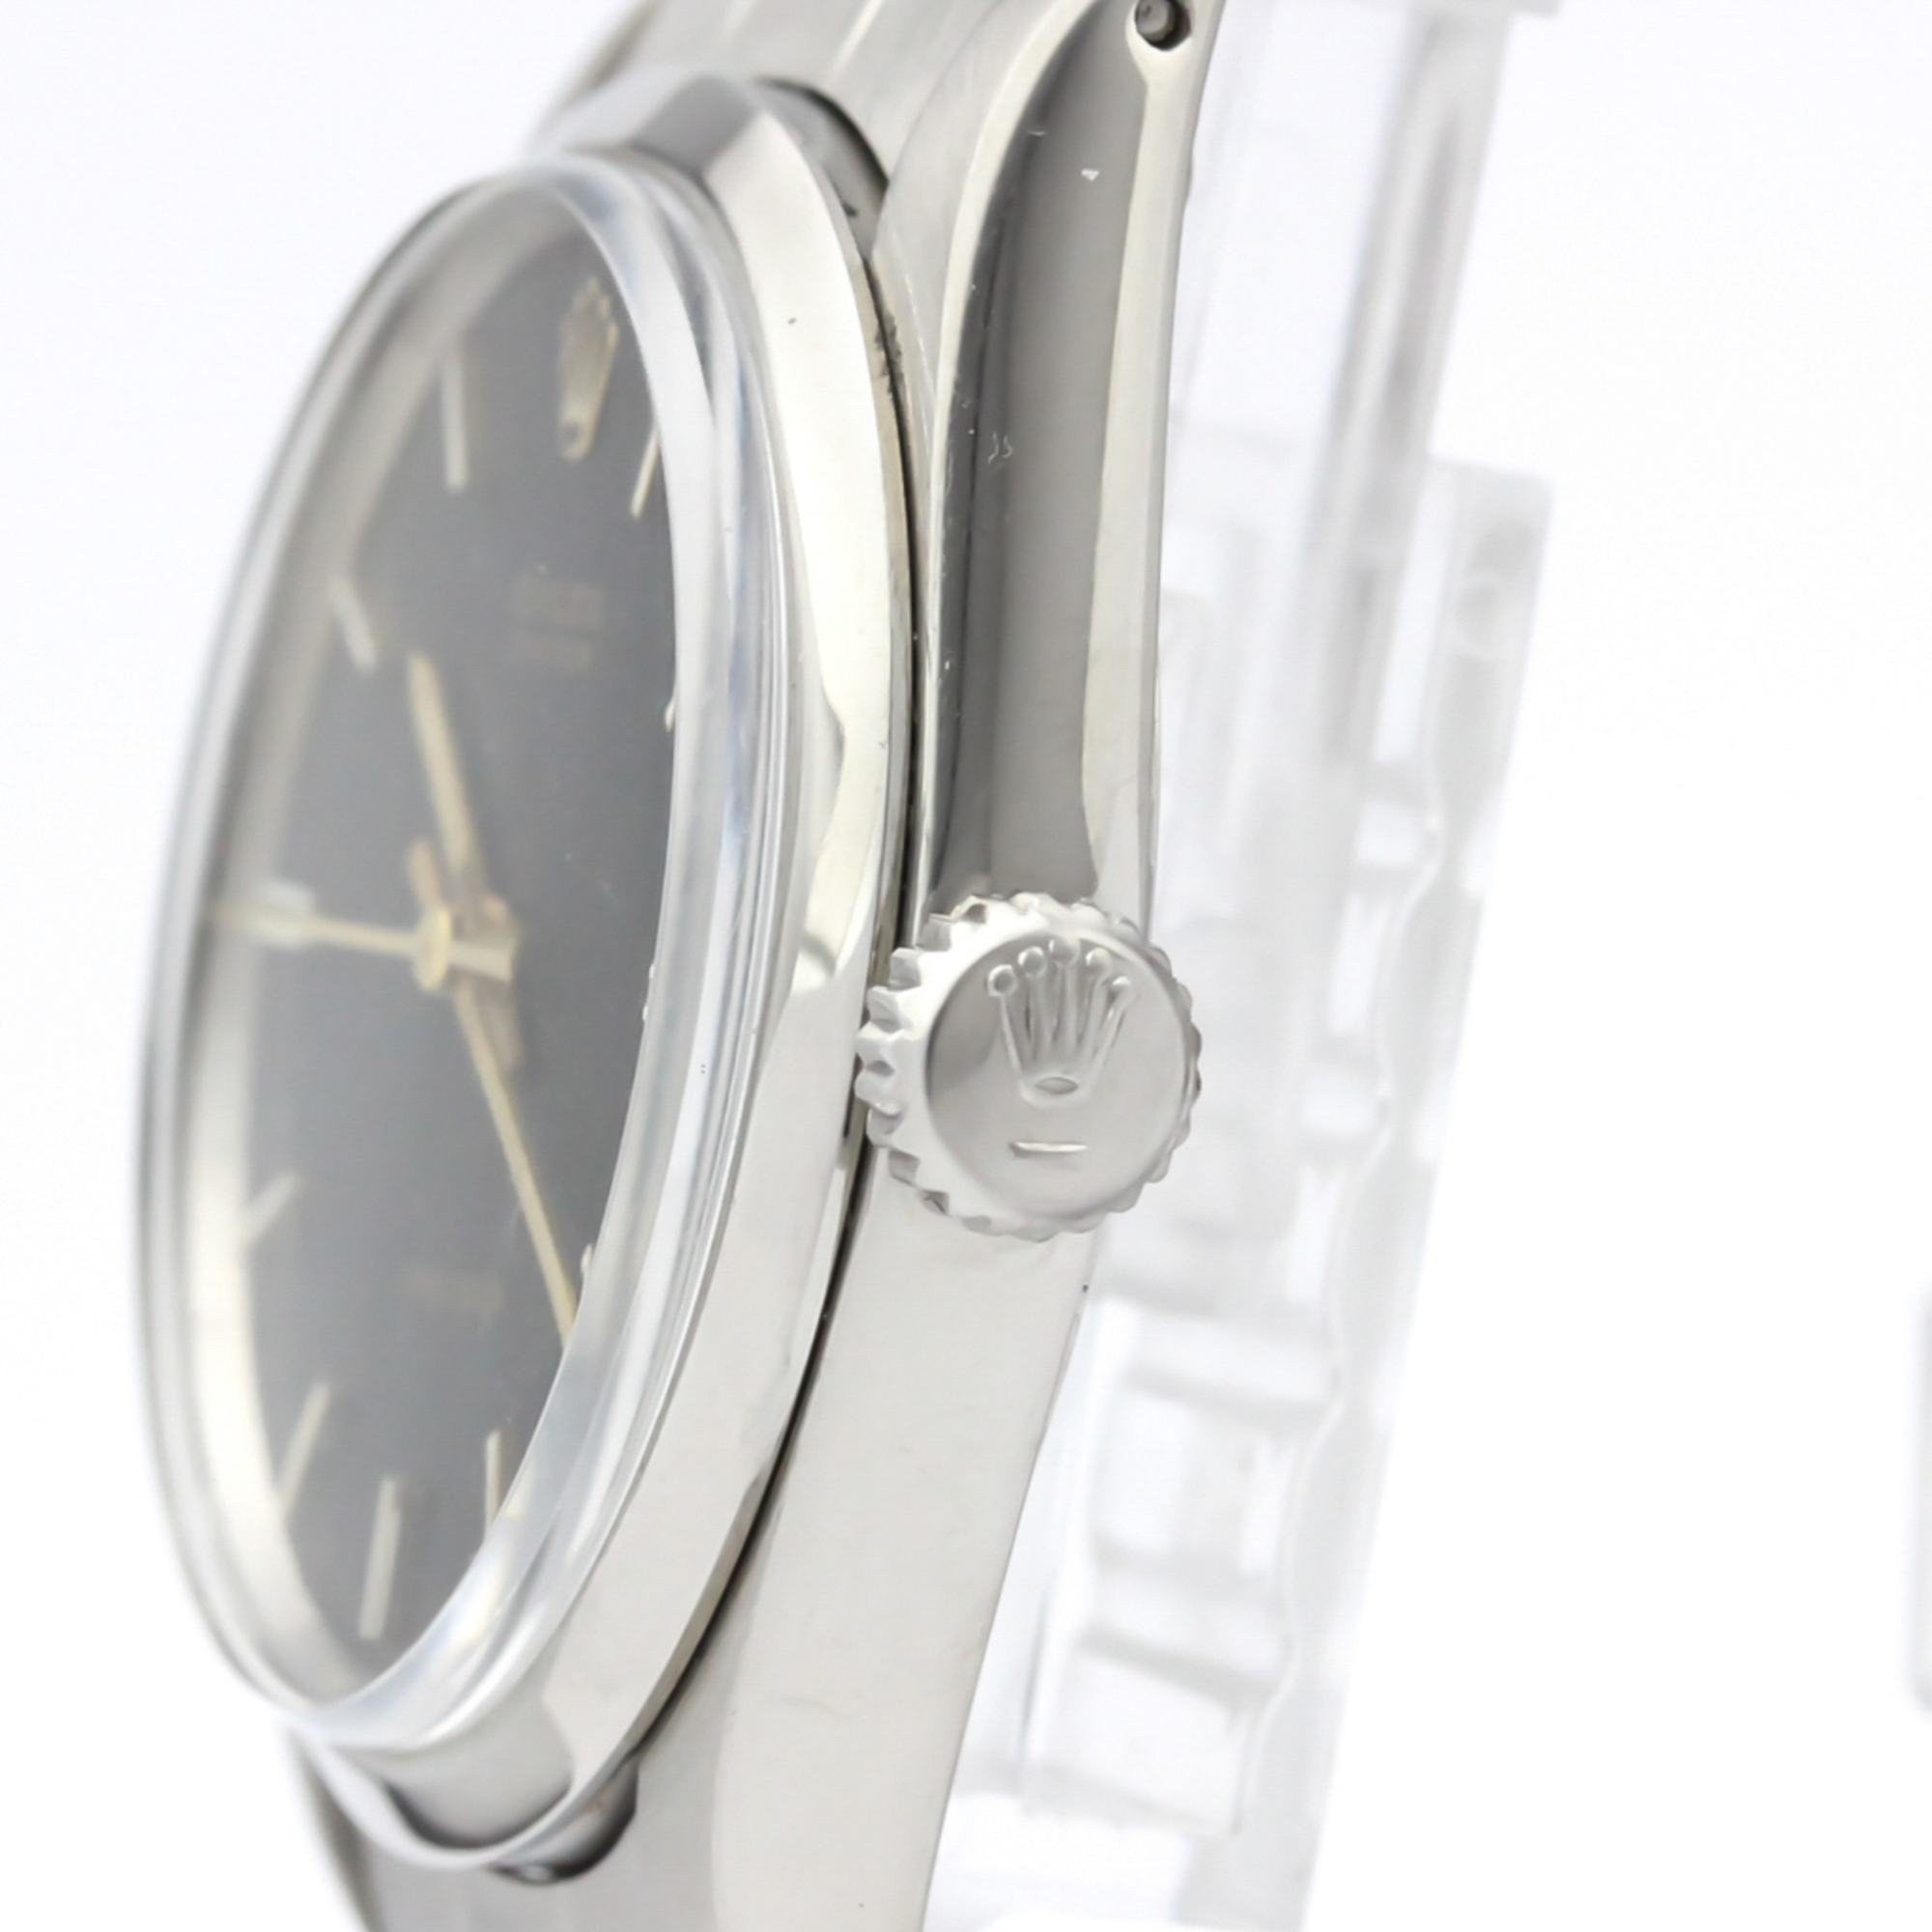 Rolex Oyster Precision Mechanical Stainless Steel Men's Dress Watch 6426